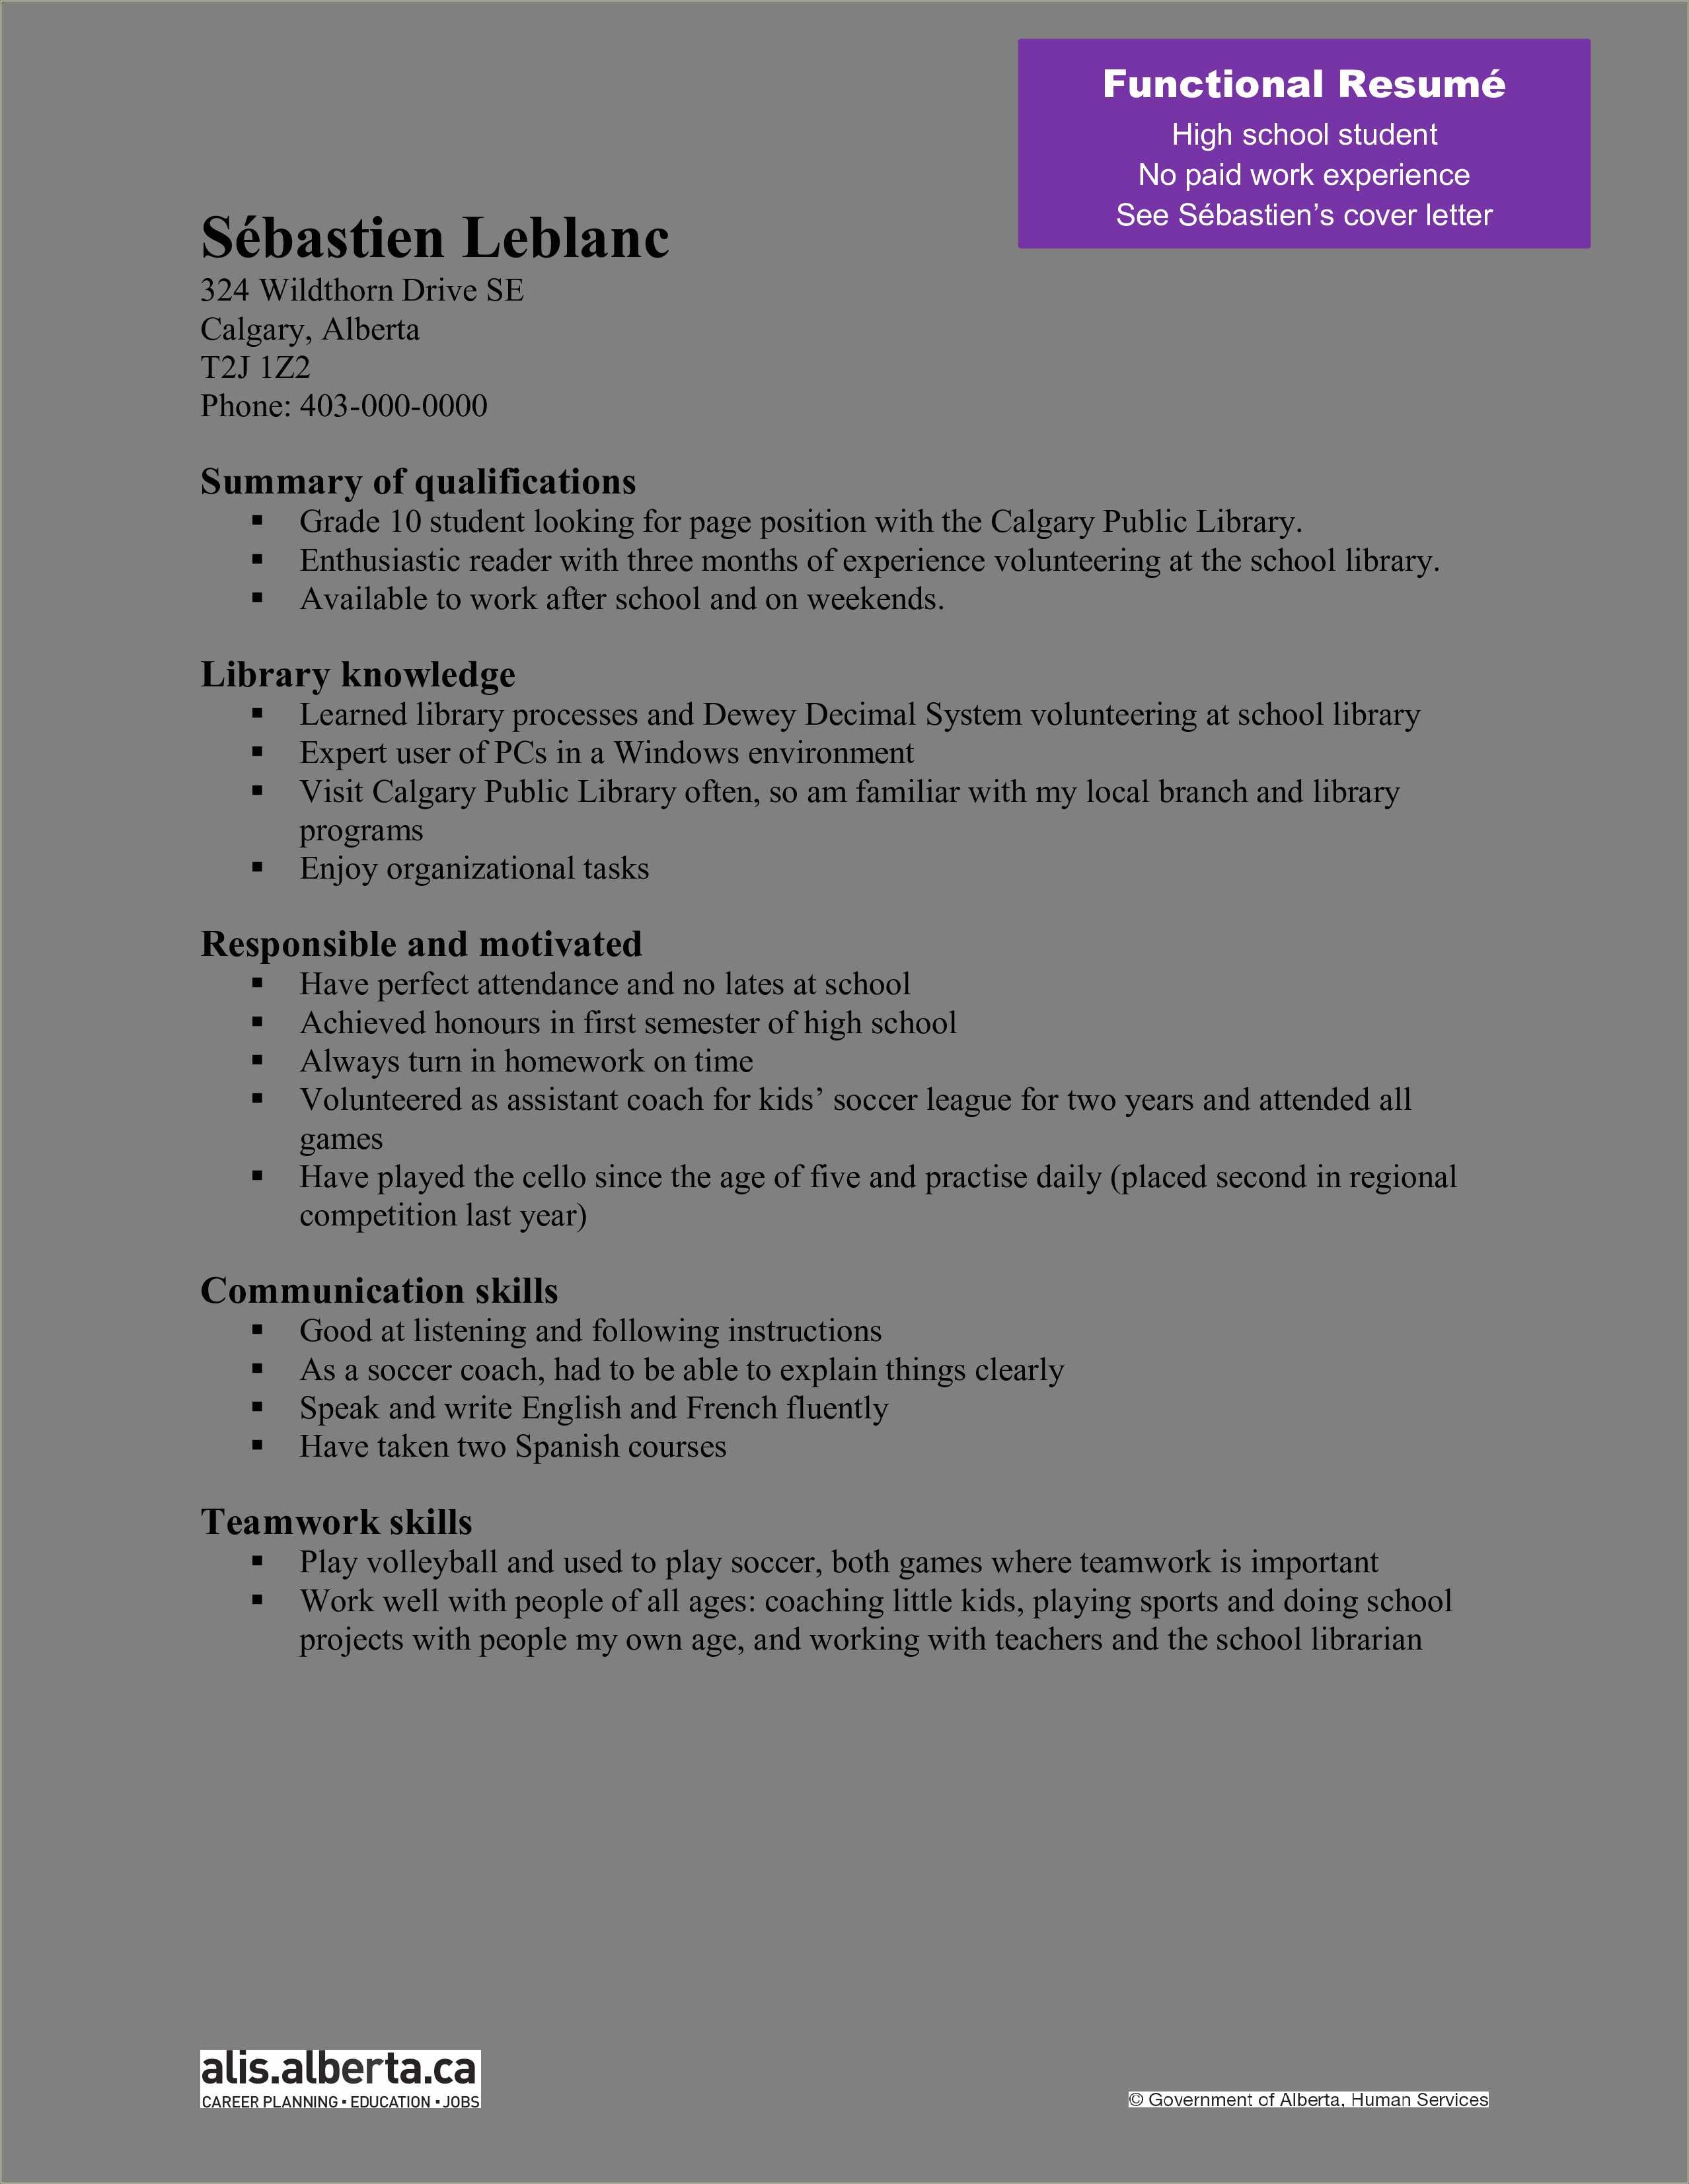 kelley-indiana-university-capstone-sample-resume-resume-example-gallery